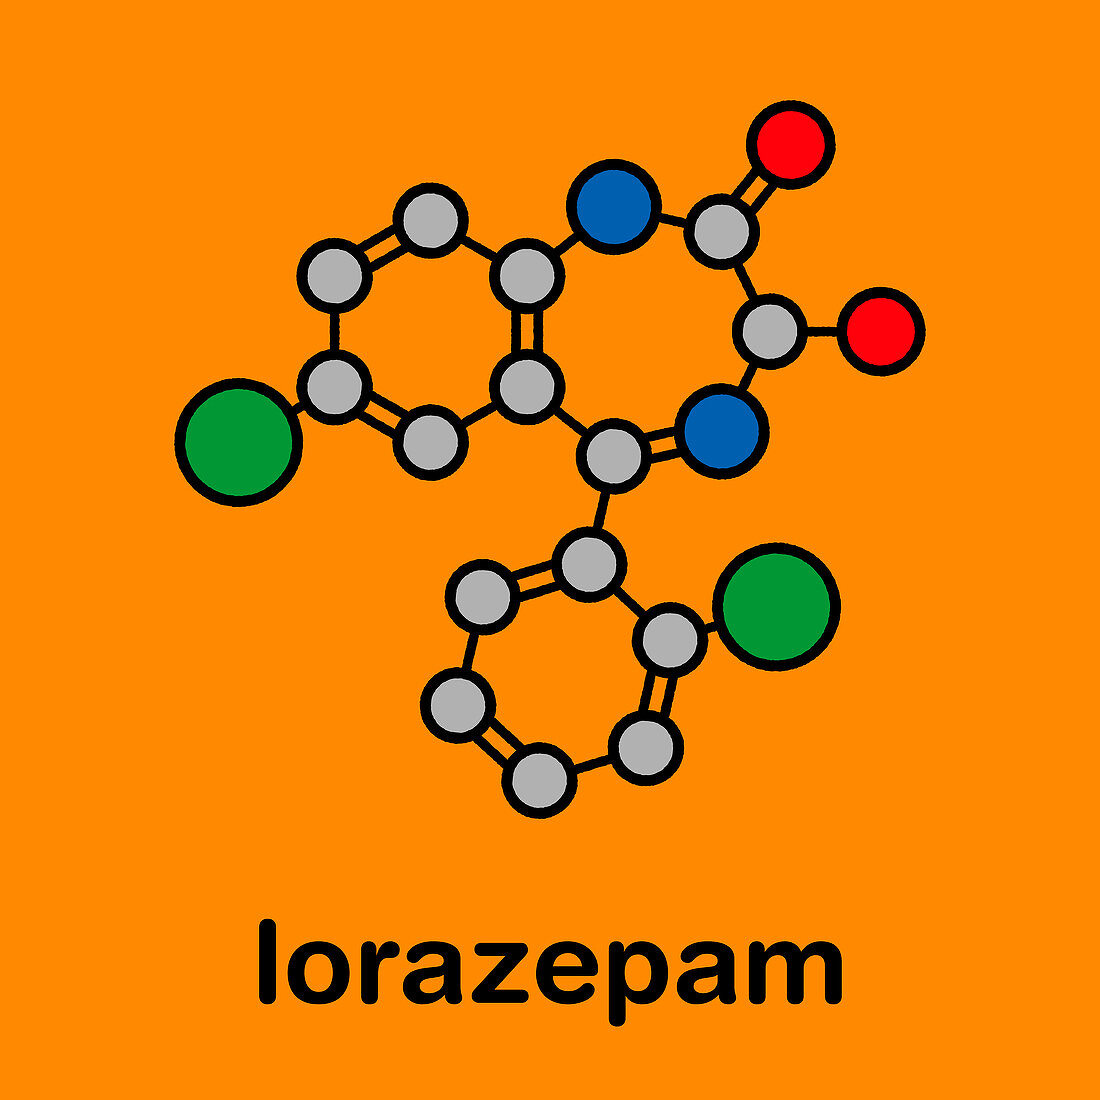 Lorazepam sedative and hypnotic drug, molecular model